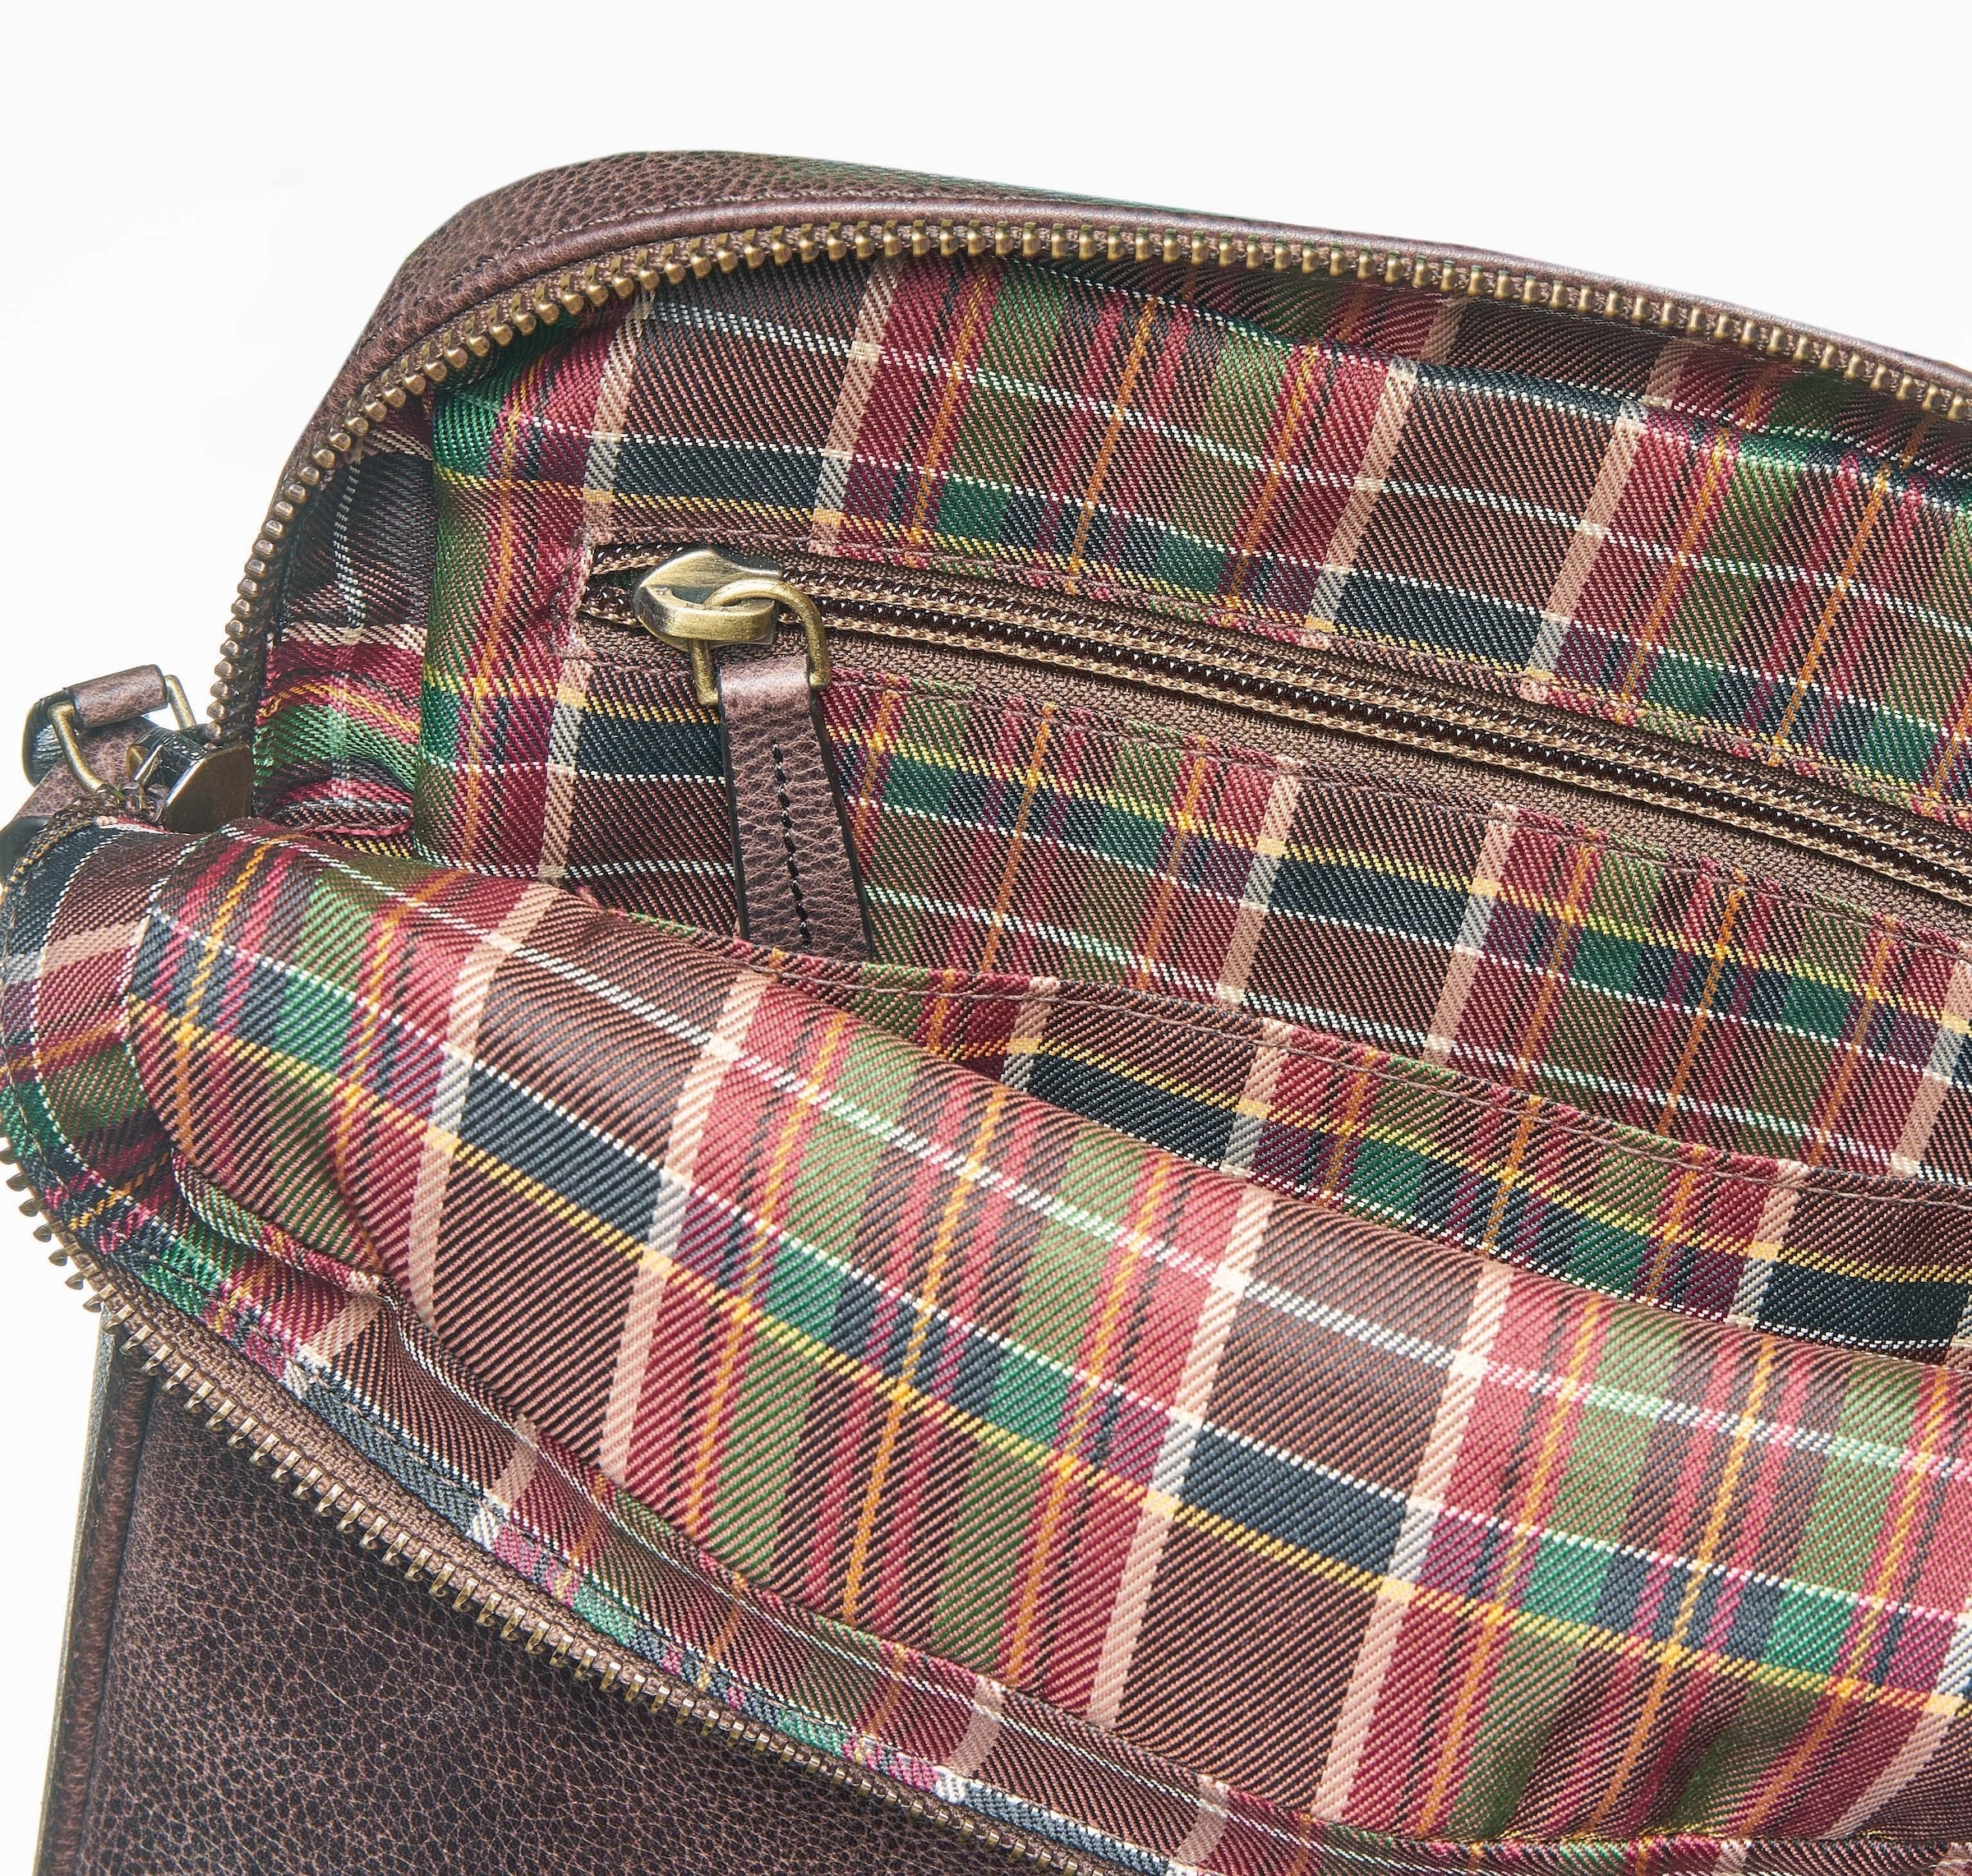 Packenger Messenger Bag »Urban Style, Capetown, Camouflage«, Umhängetasche Schultertasche Ledertasche